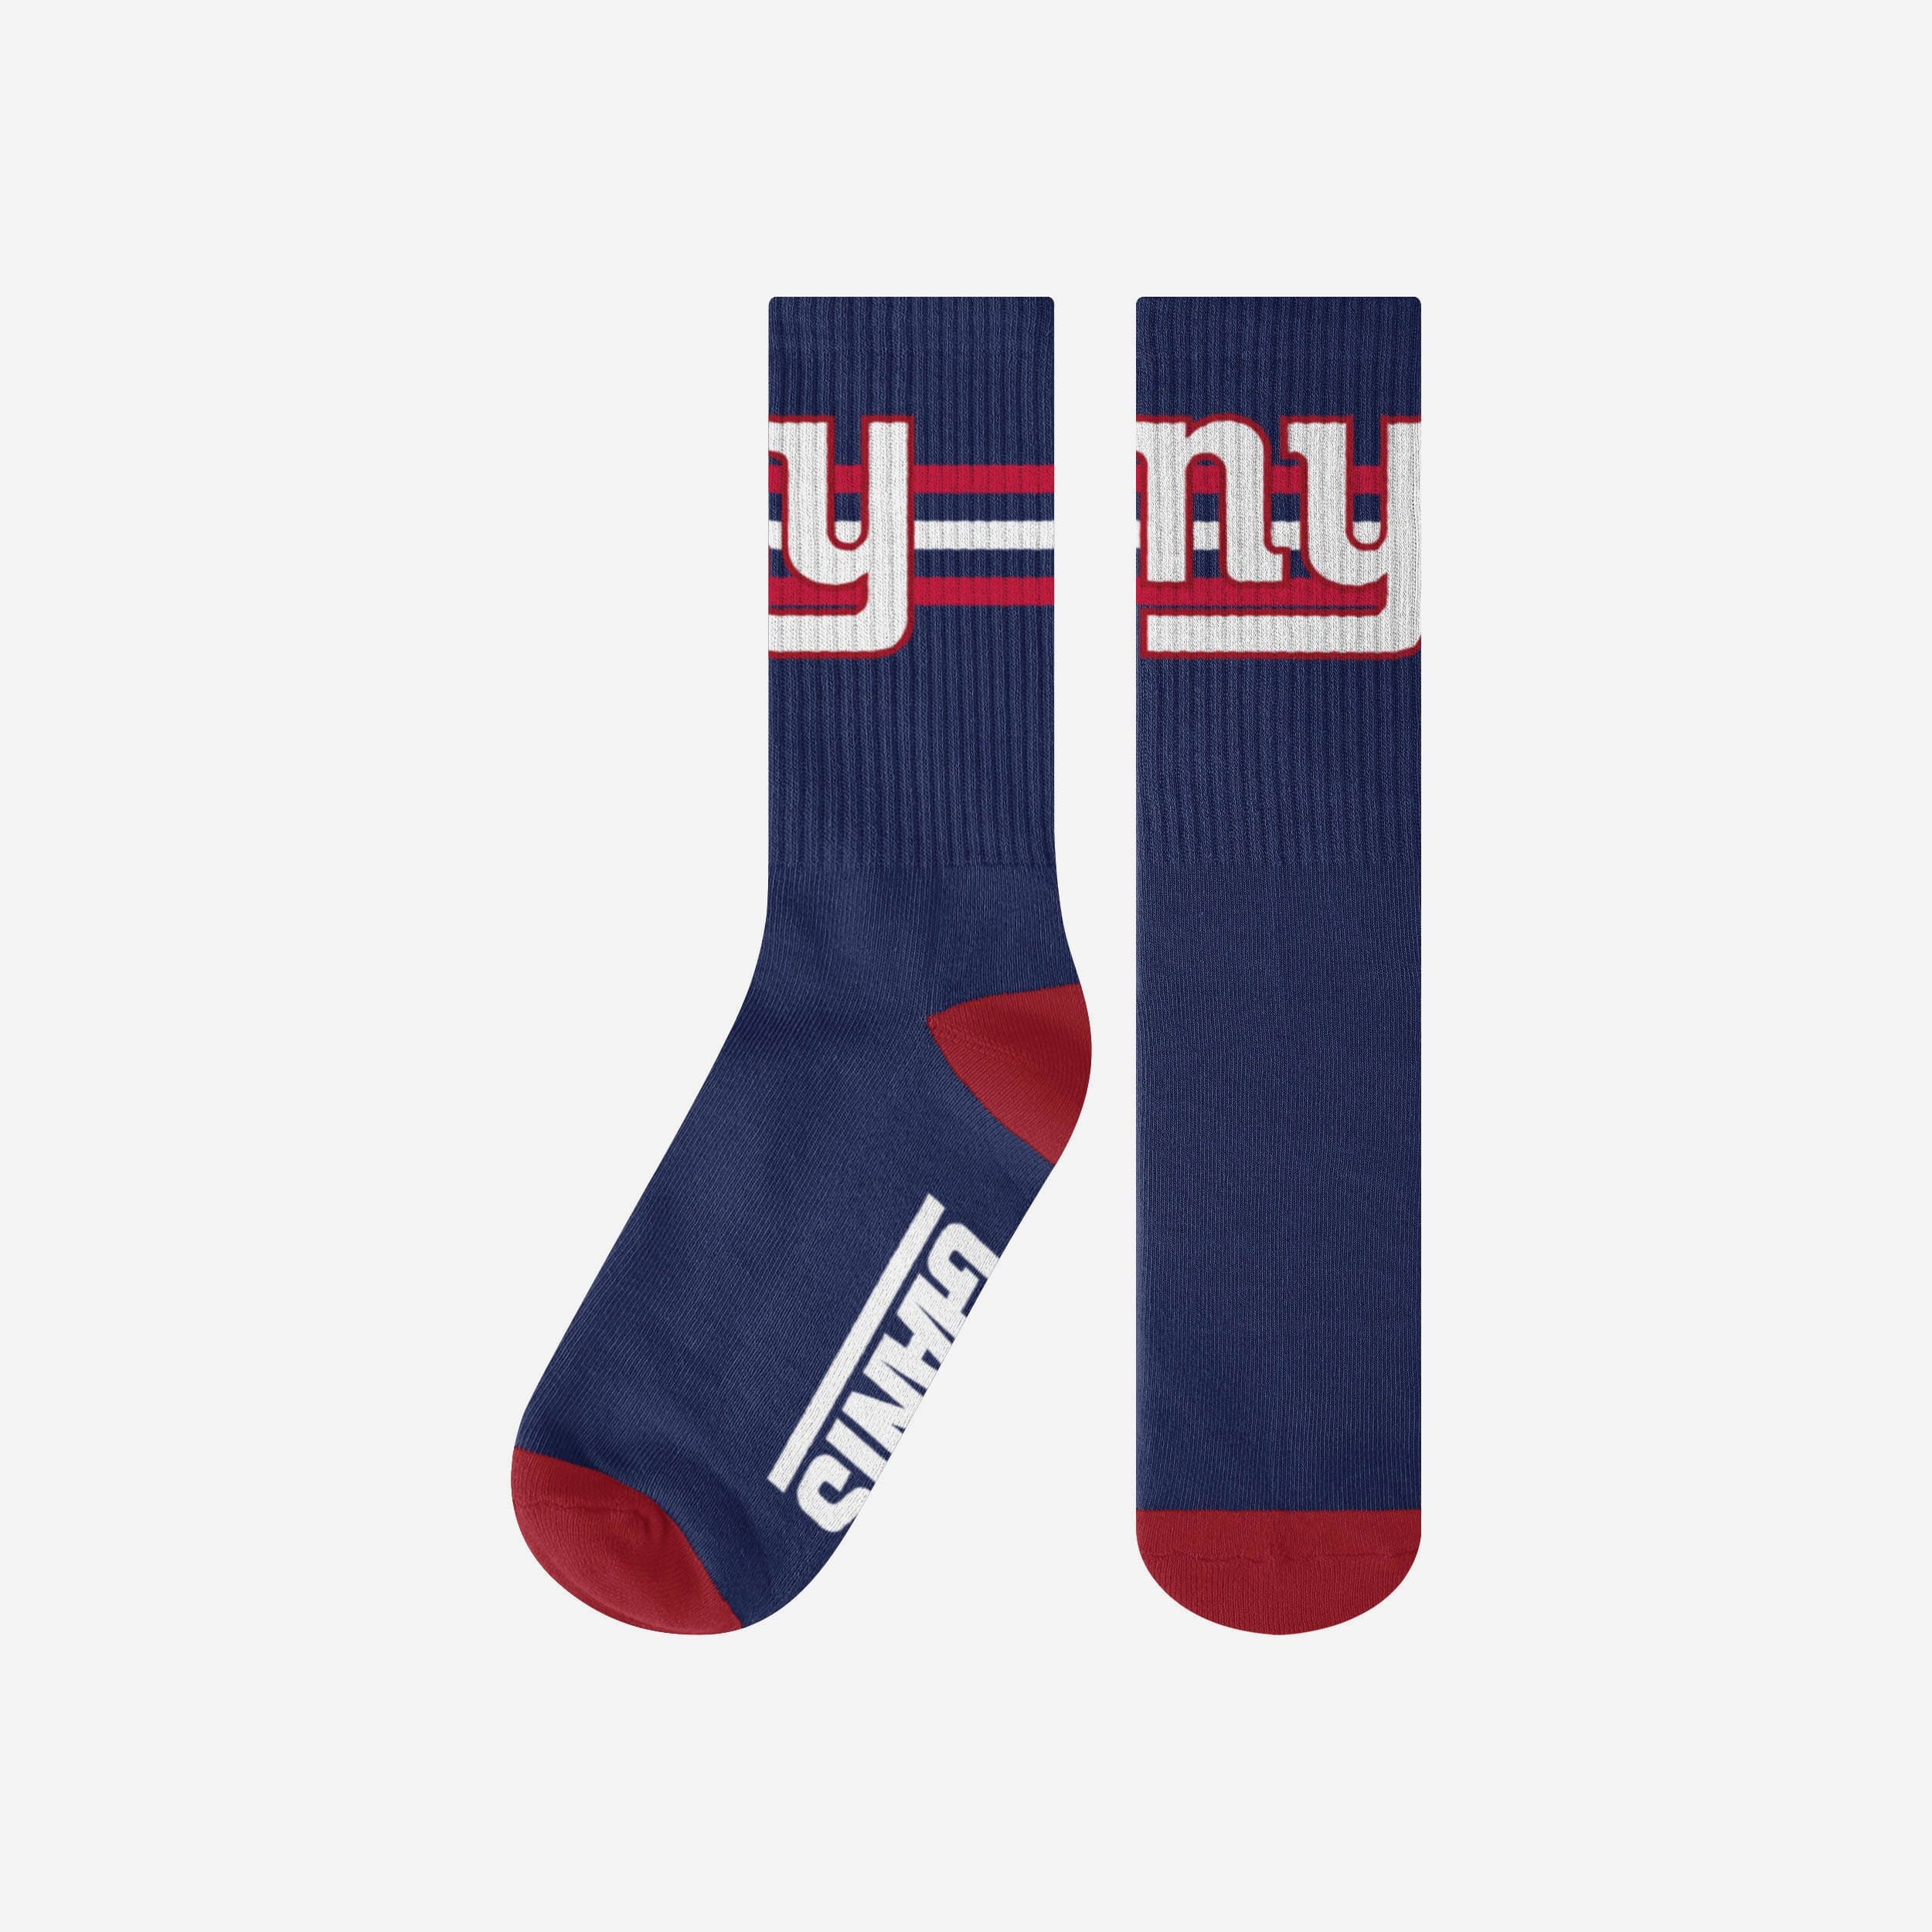 Stance NY Giants Camo Socks